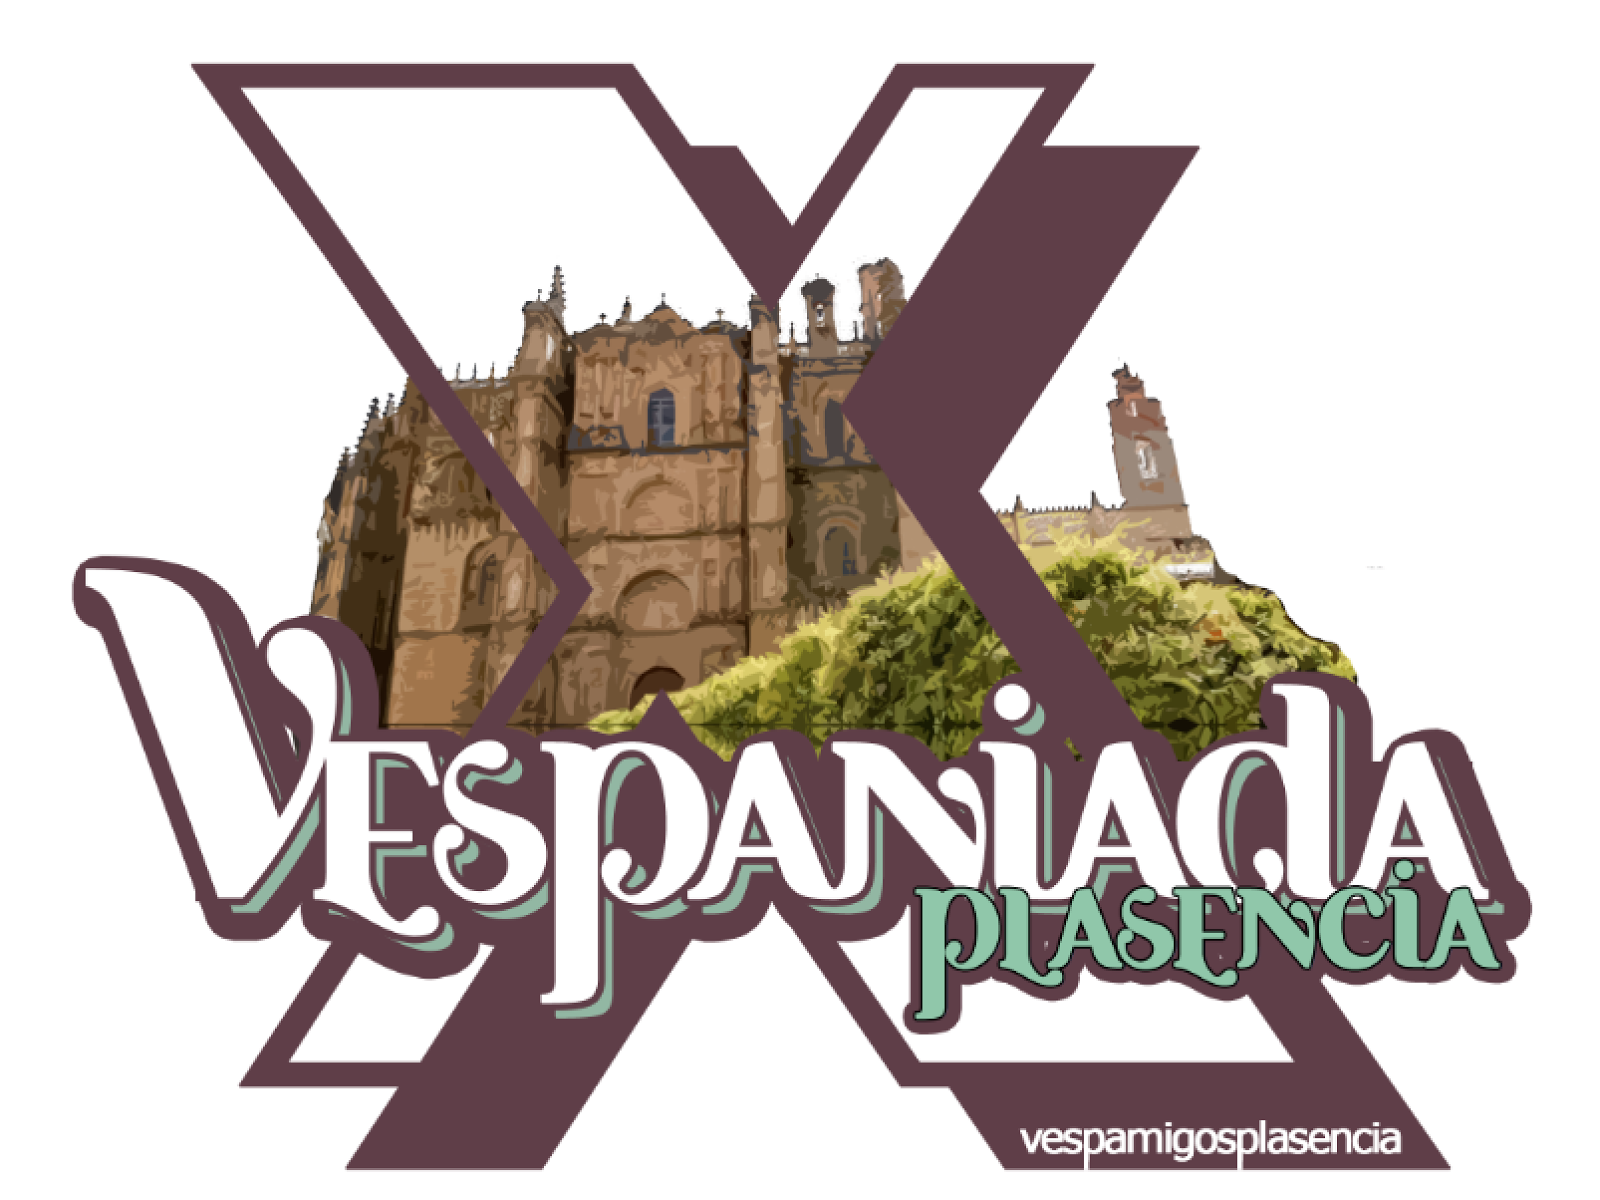 X VESPANIADA - Vespamigos Plasencia